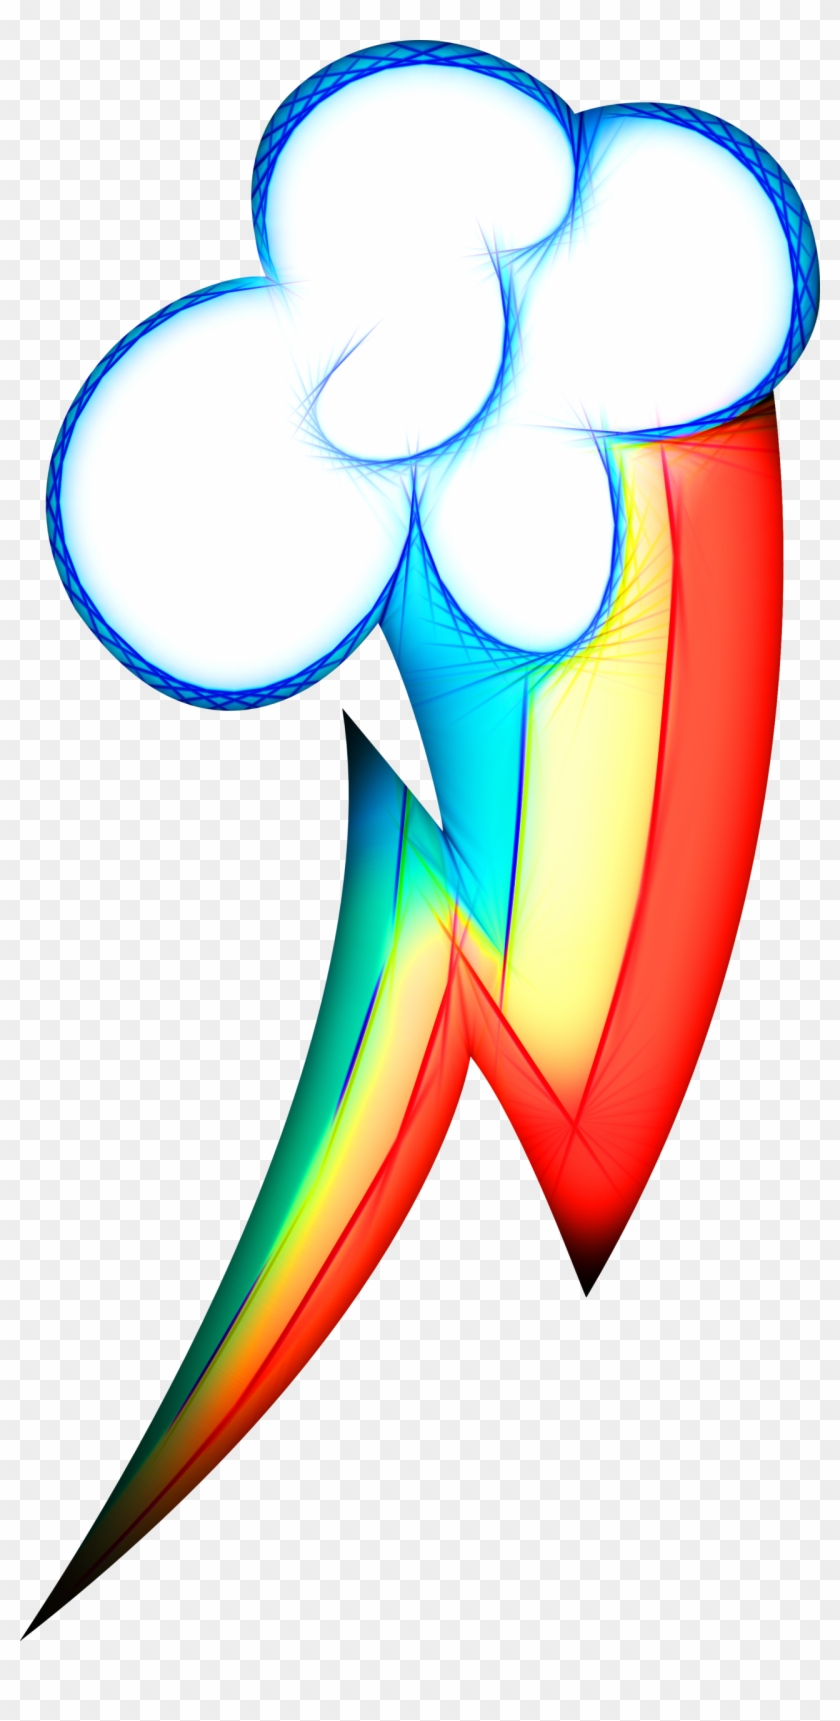 Neon Rainbow Dash's Cutie Mark - Rainbow Dash Cutie Mark Tattoo #1131732